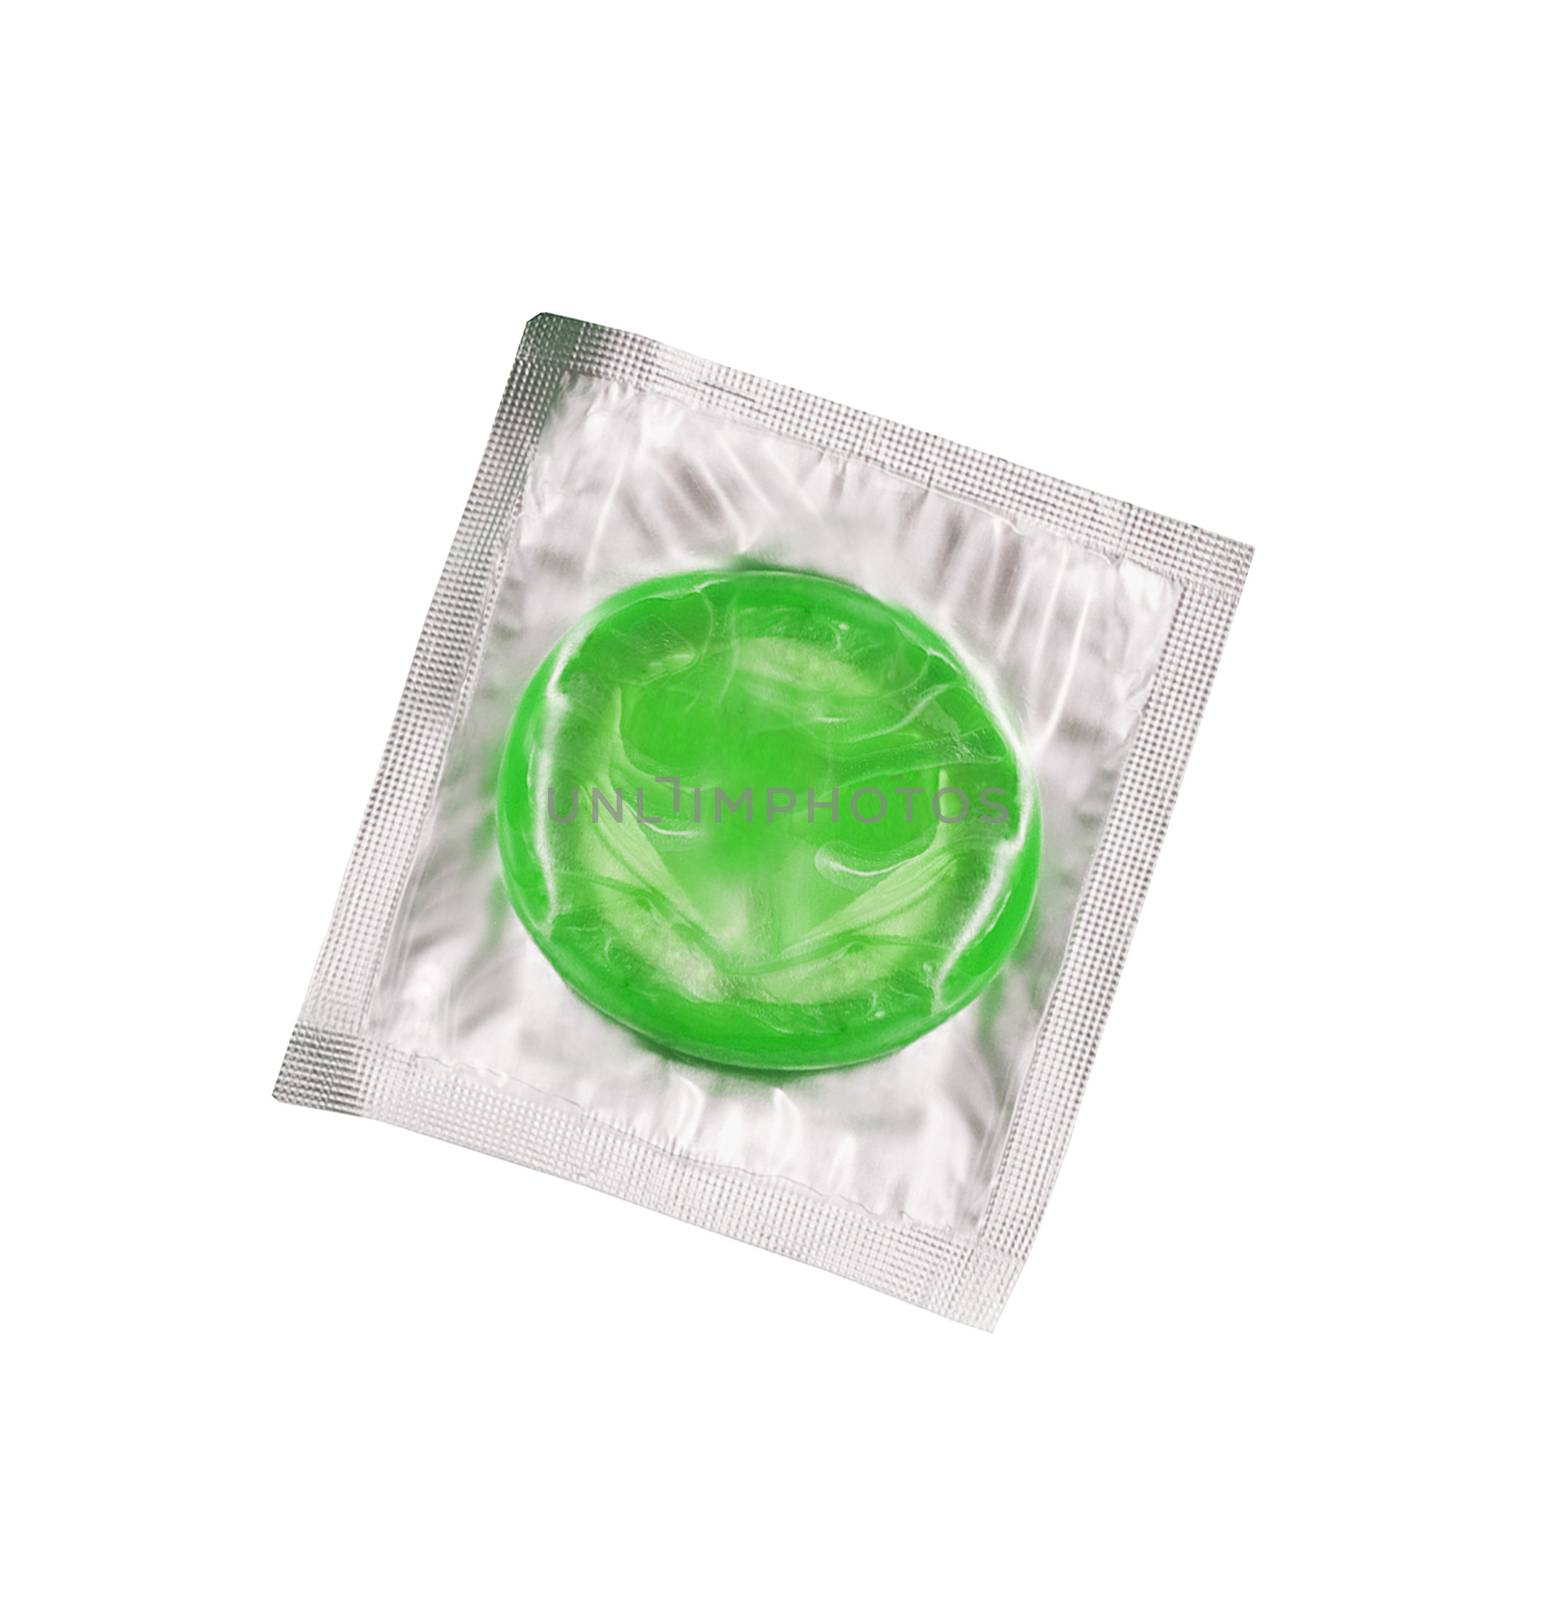 Condom isolated on white background